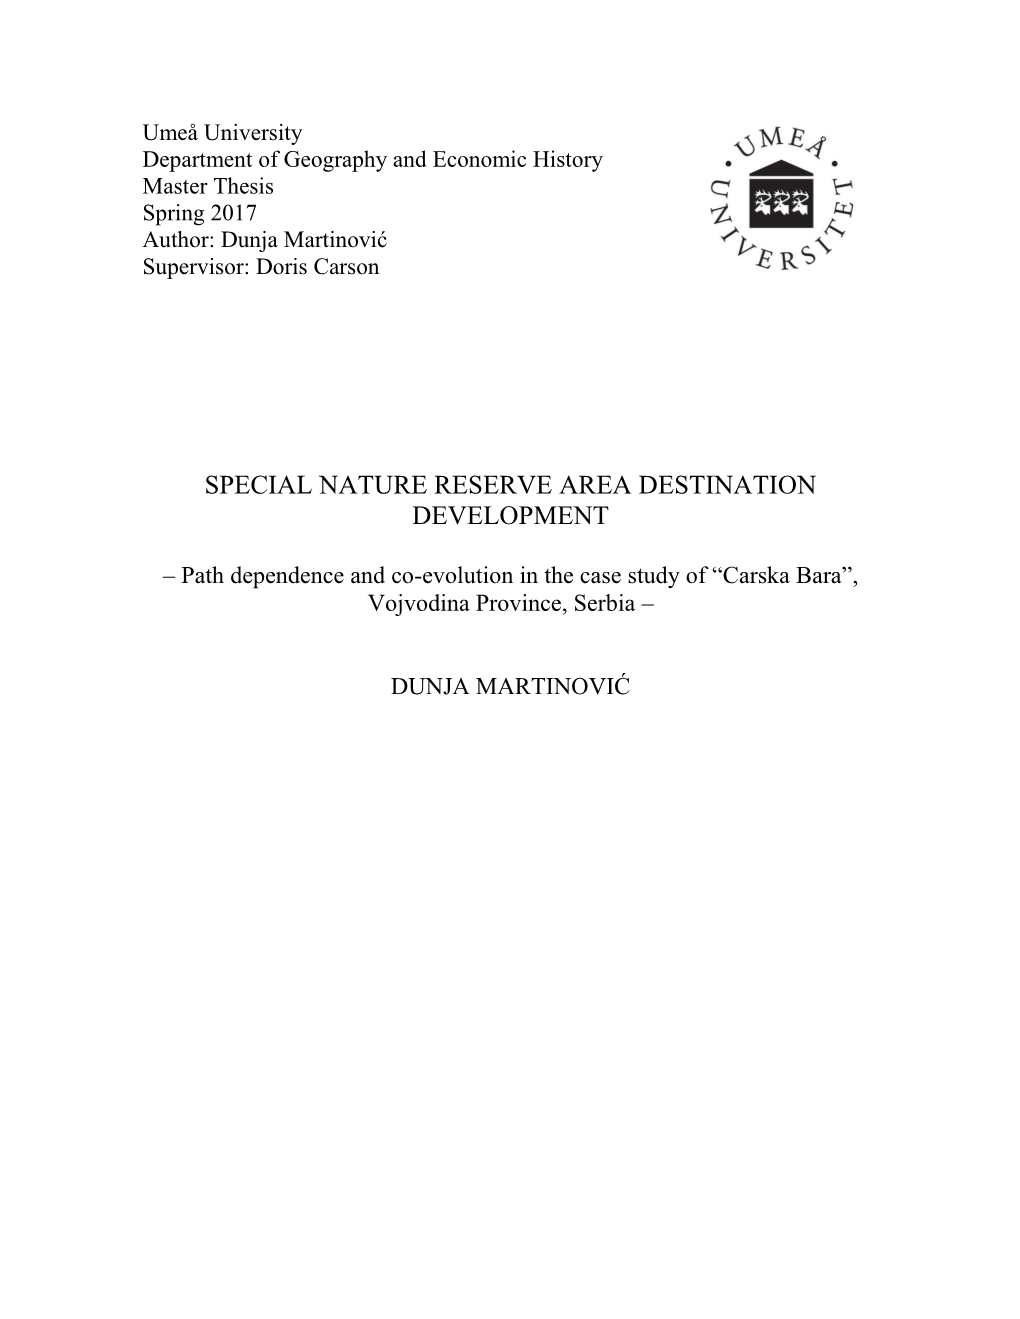 Special Nature Reserve Area Destination Development